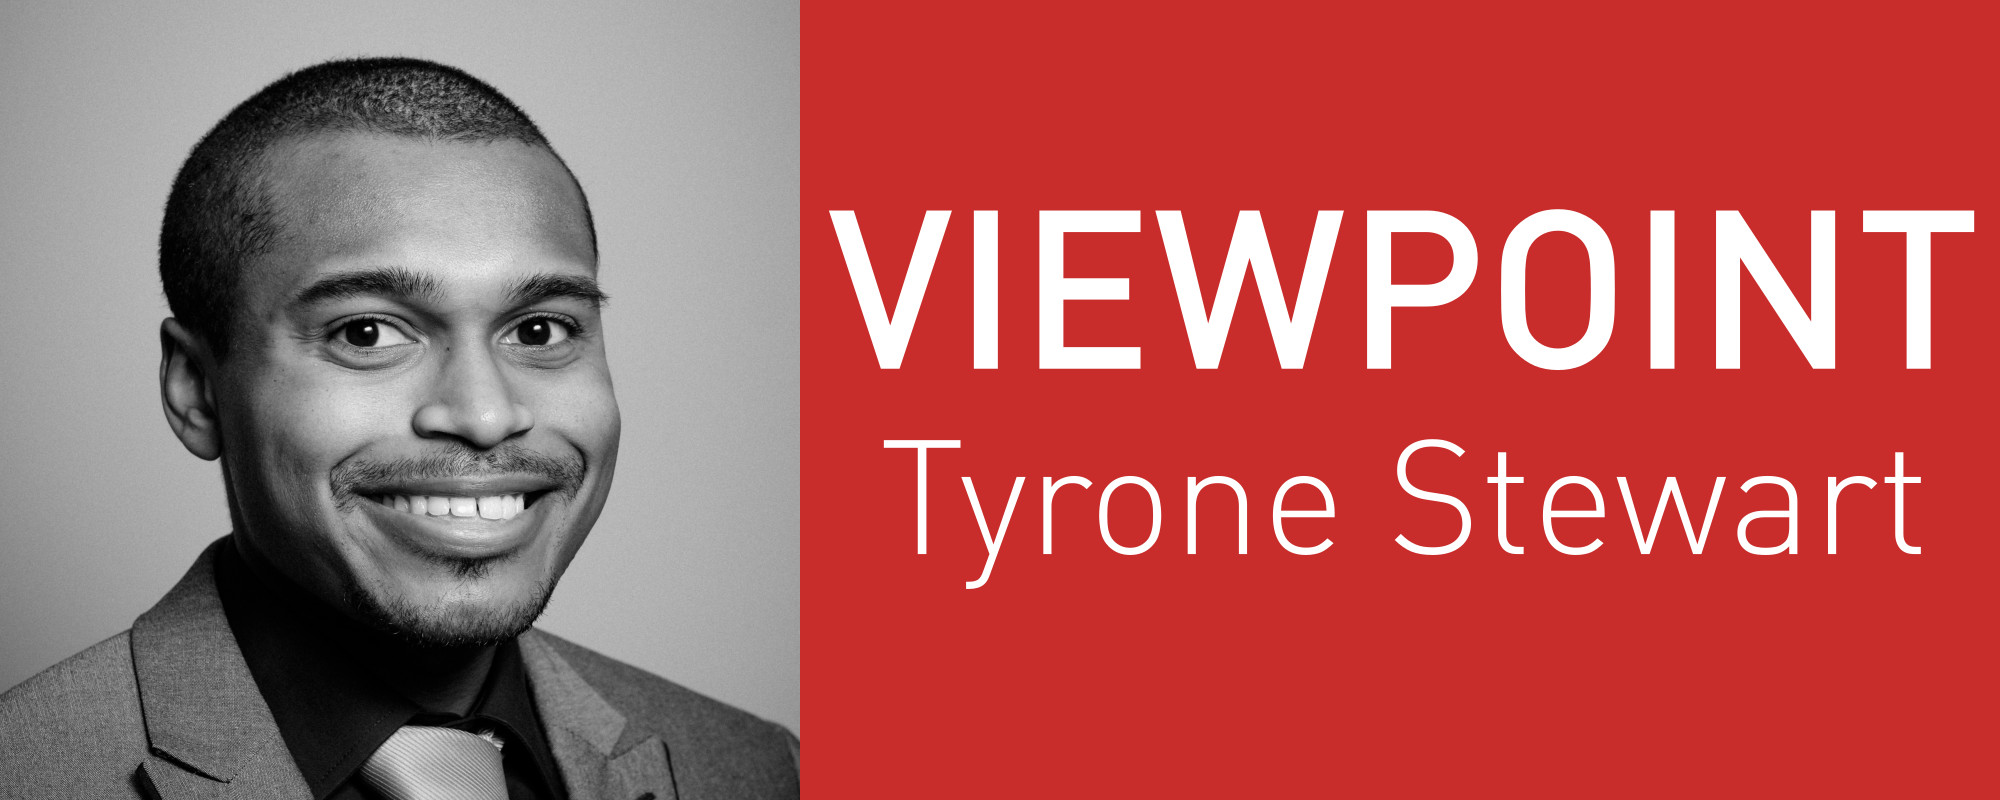 Viewpoint Tyrone Stewart